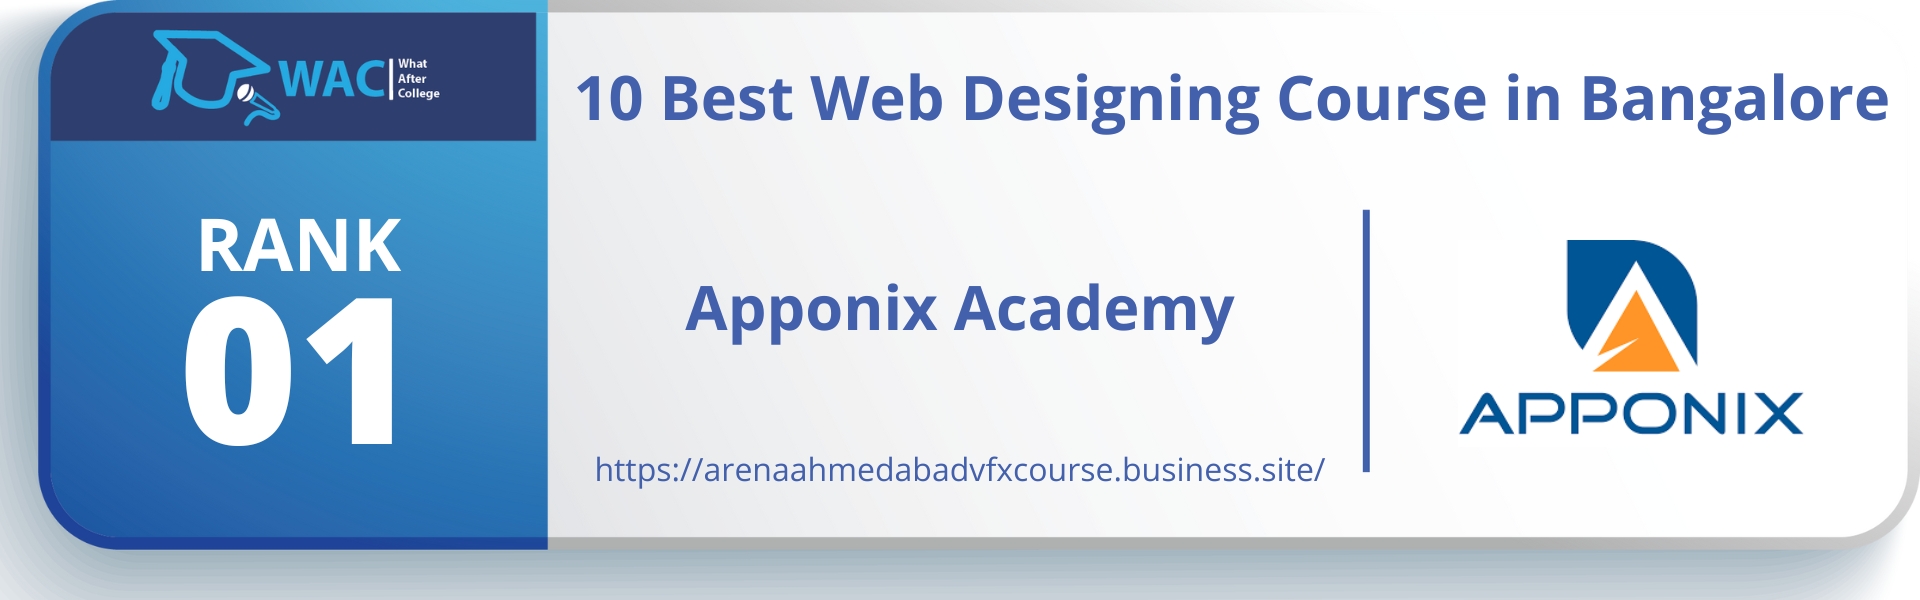 Web Designing Course in Bangalore